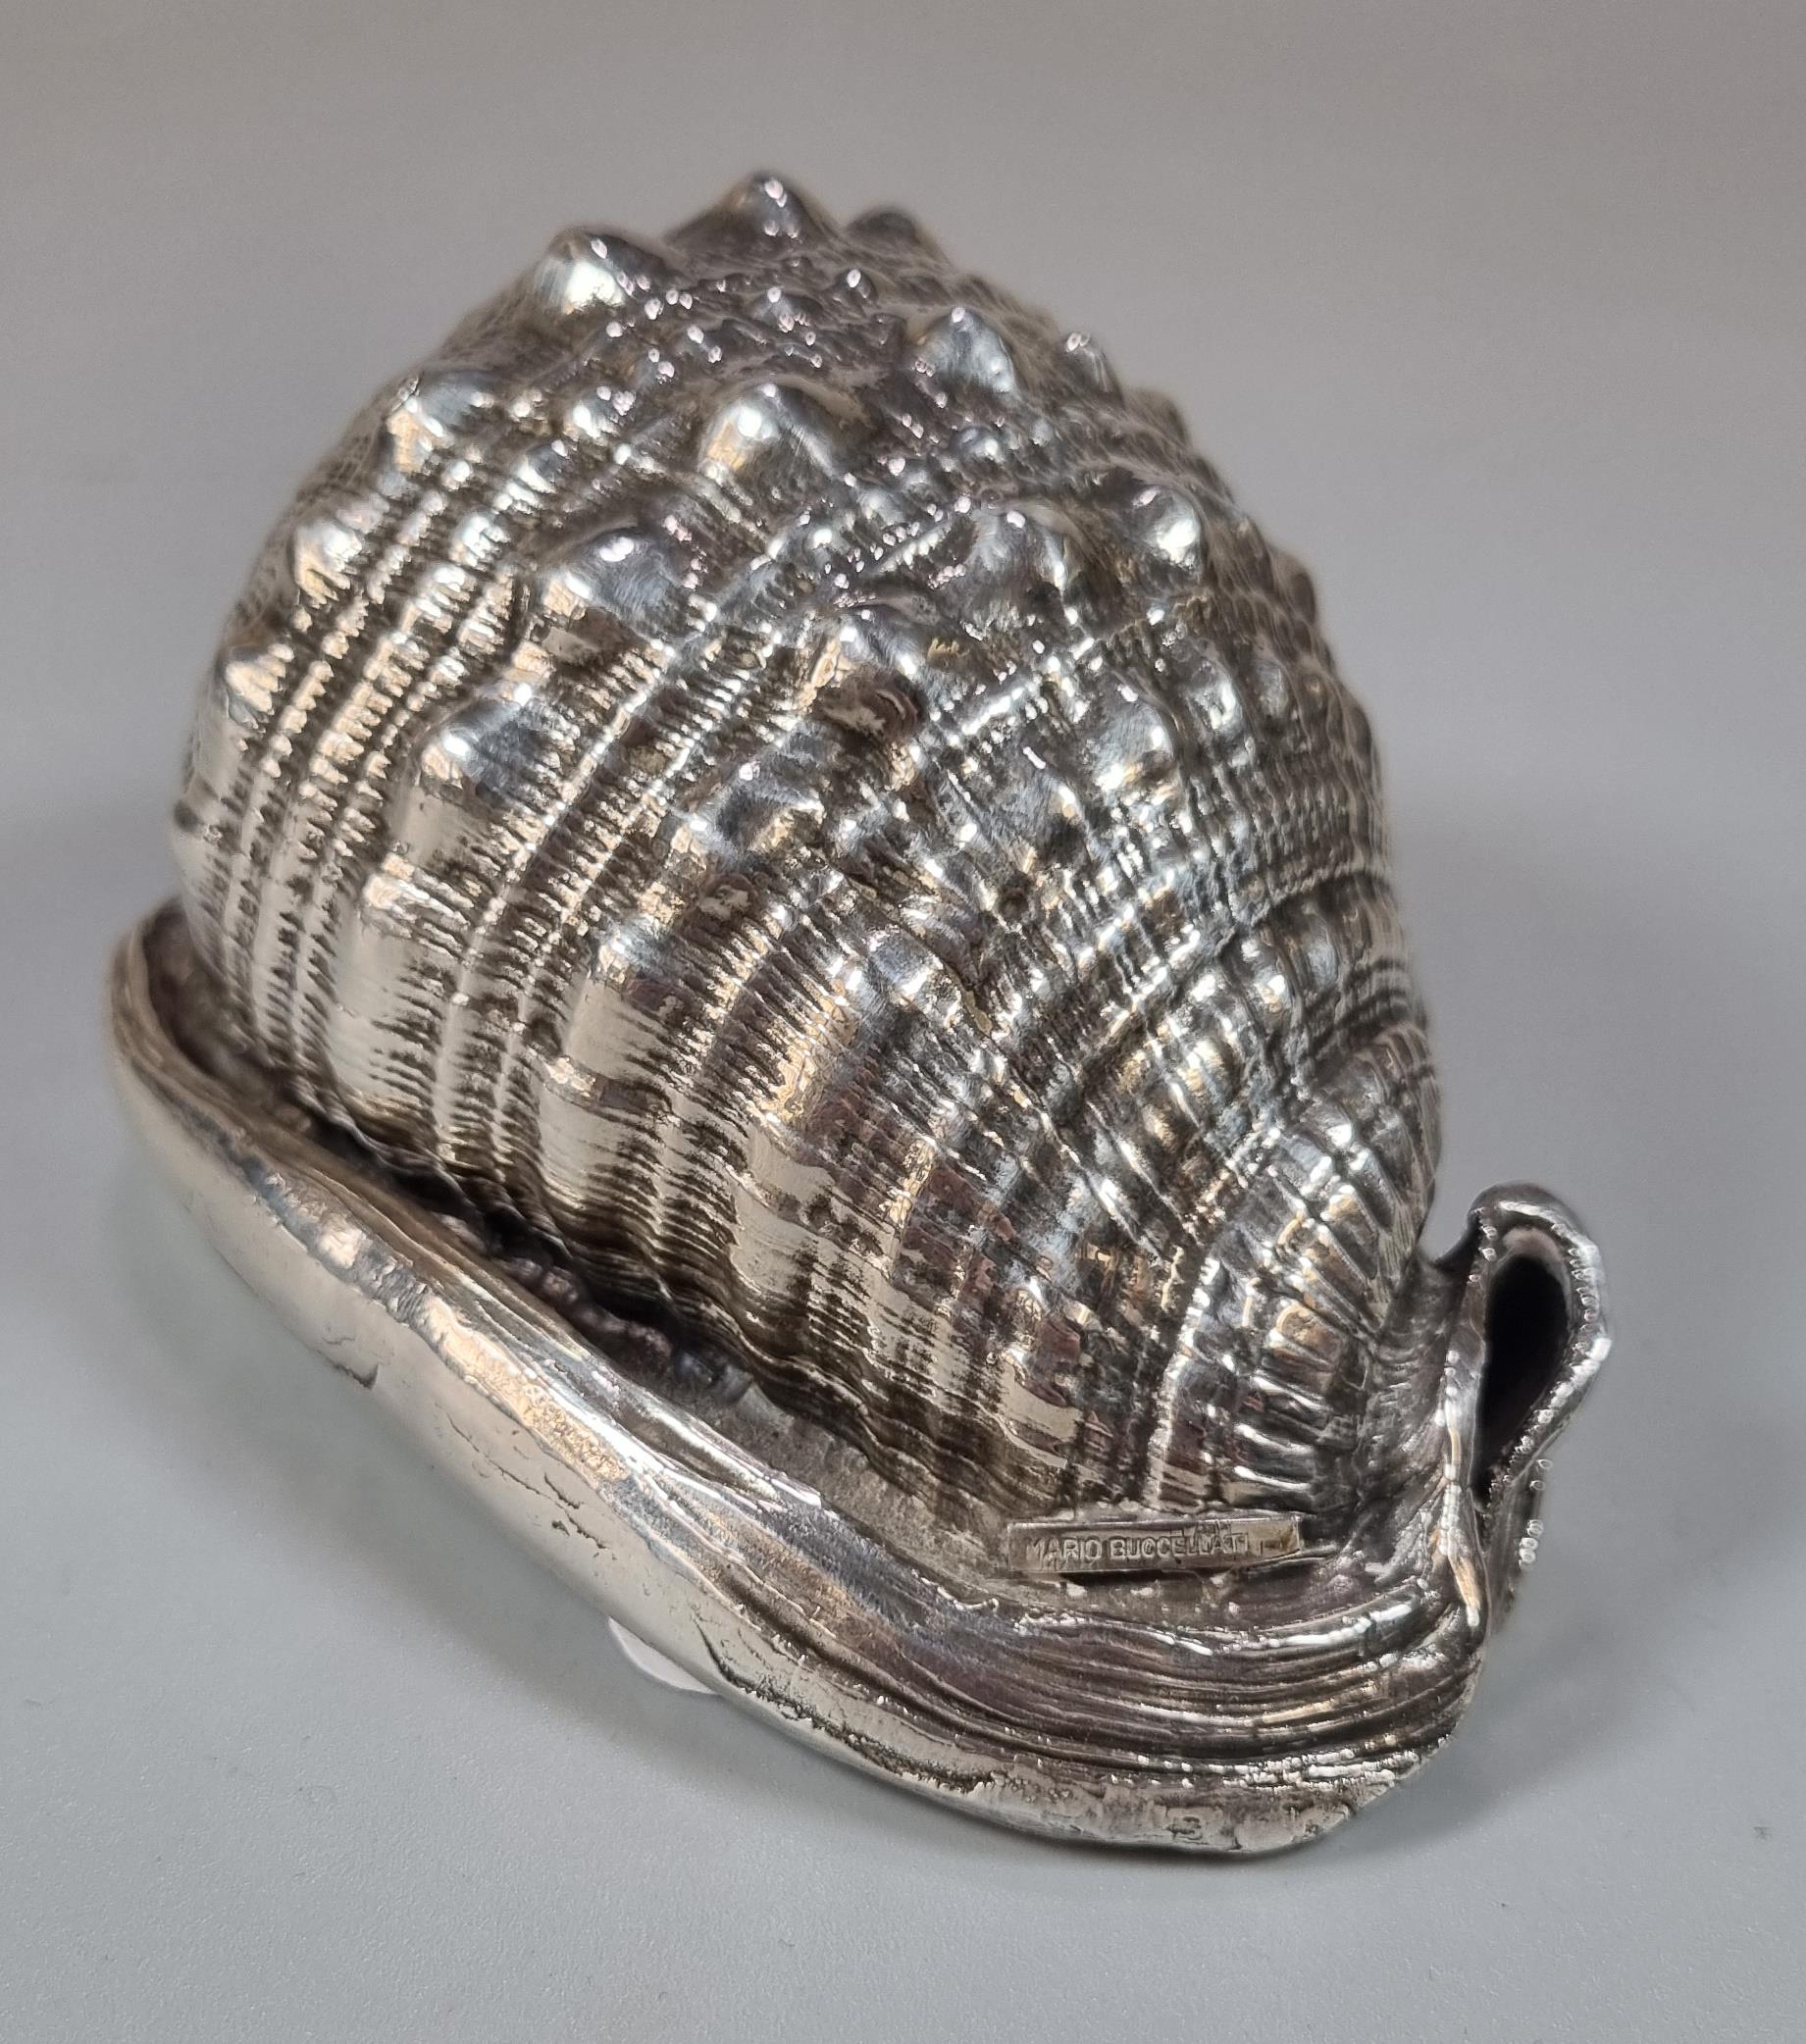 Mario Buccellati, silverplated study of a marine conch shell. (B.P. 21% + VAT)